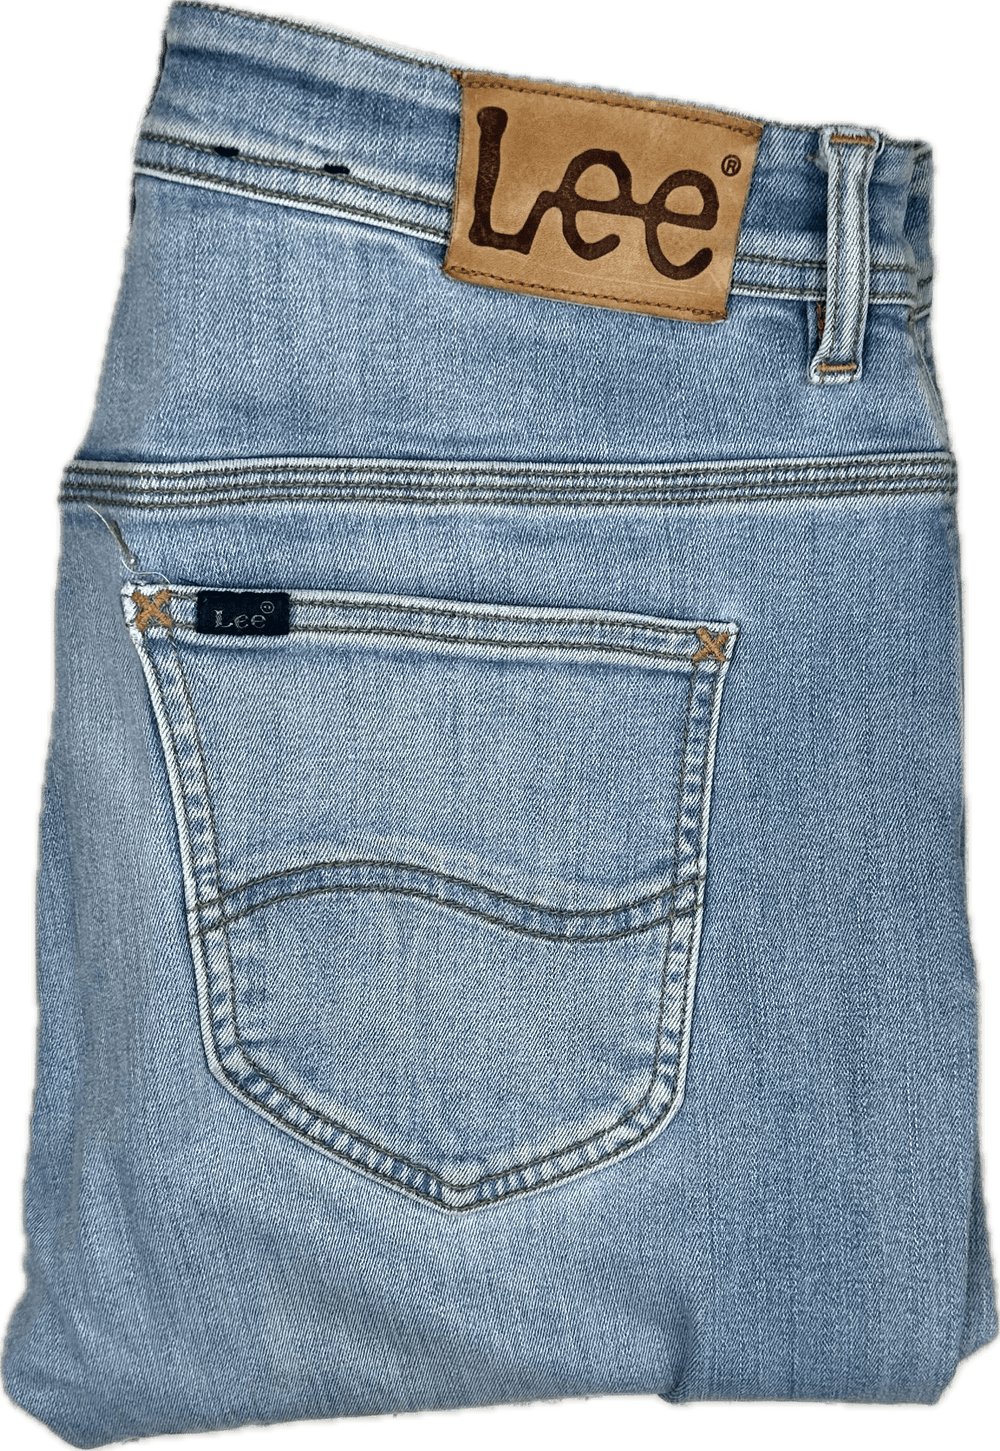 Lee 'Z Two- Slim Tapered' Men's Stretch Jeans - Size 32 Crop - Jean Pool